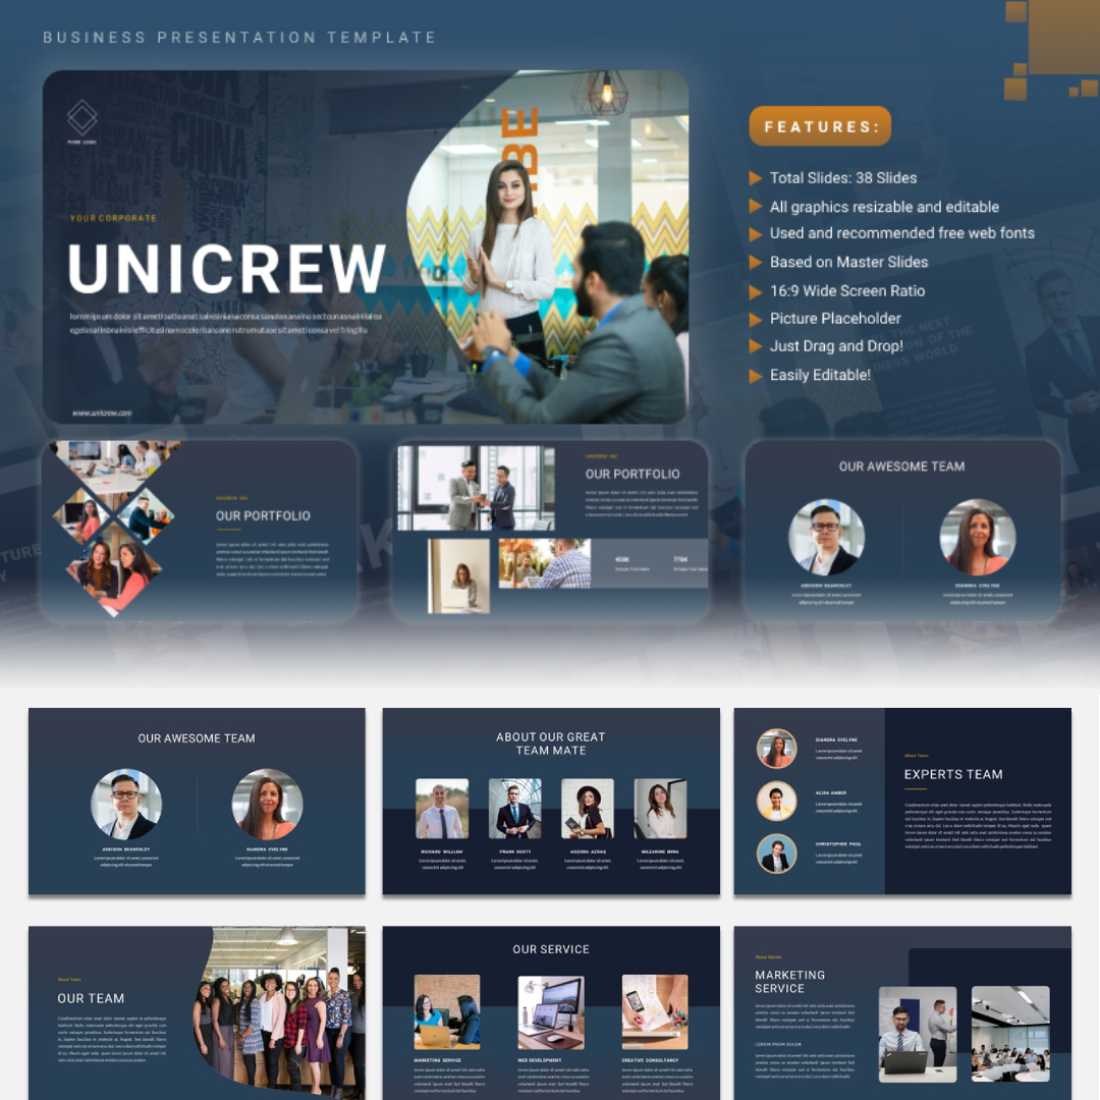 Unicrew - Business Multipurpose Keynote Presentation Template cover image.